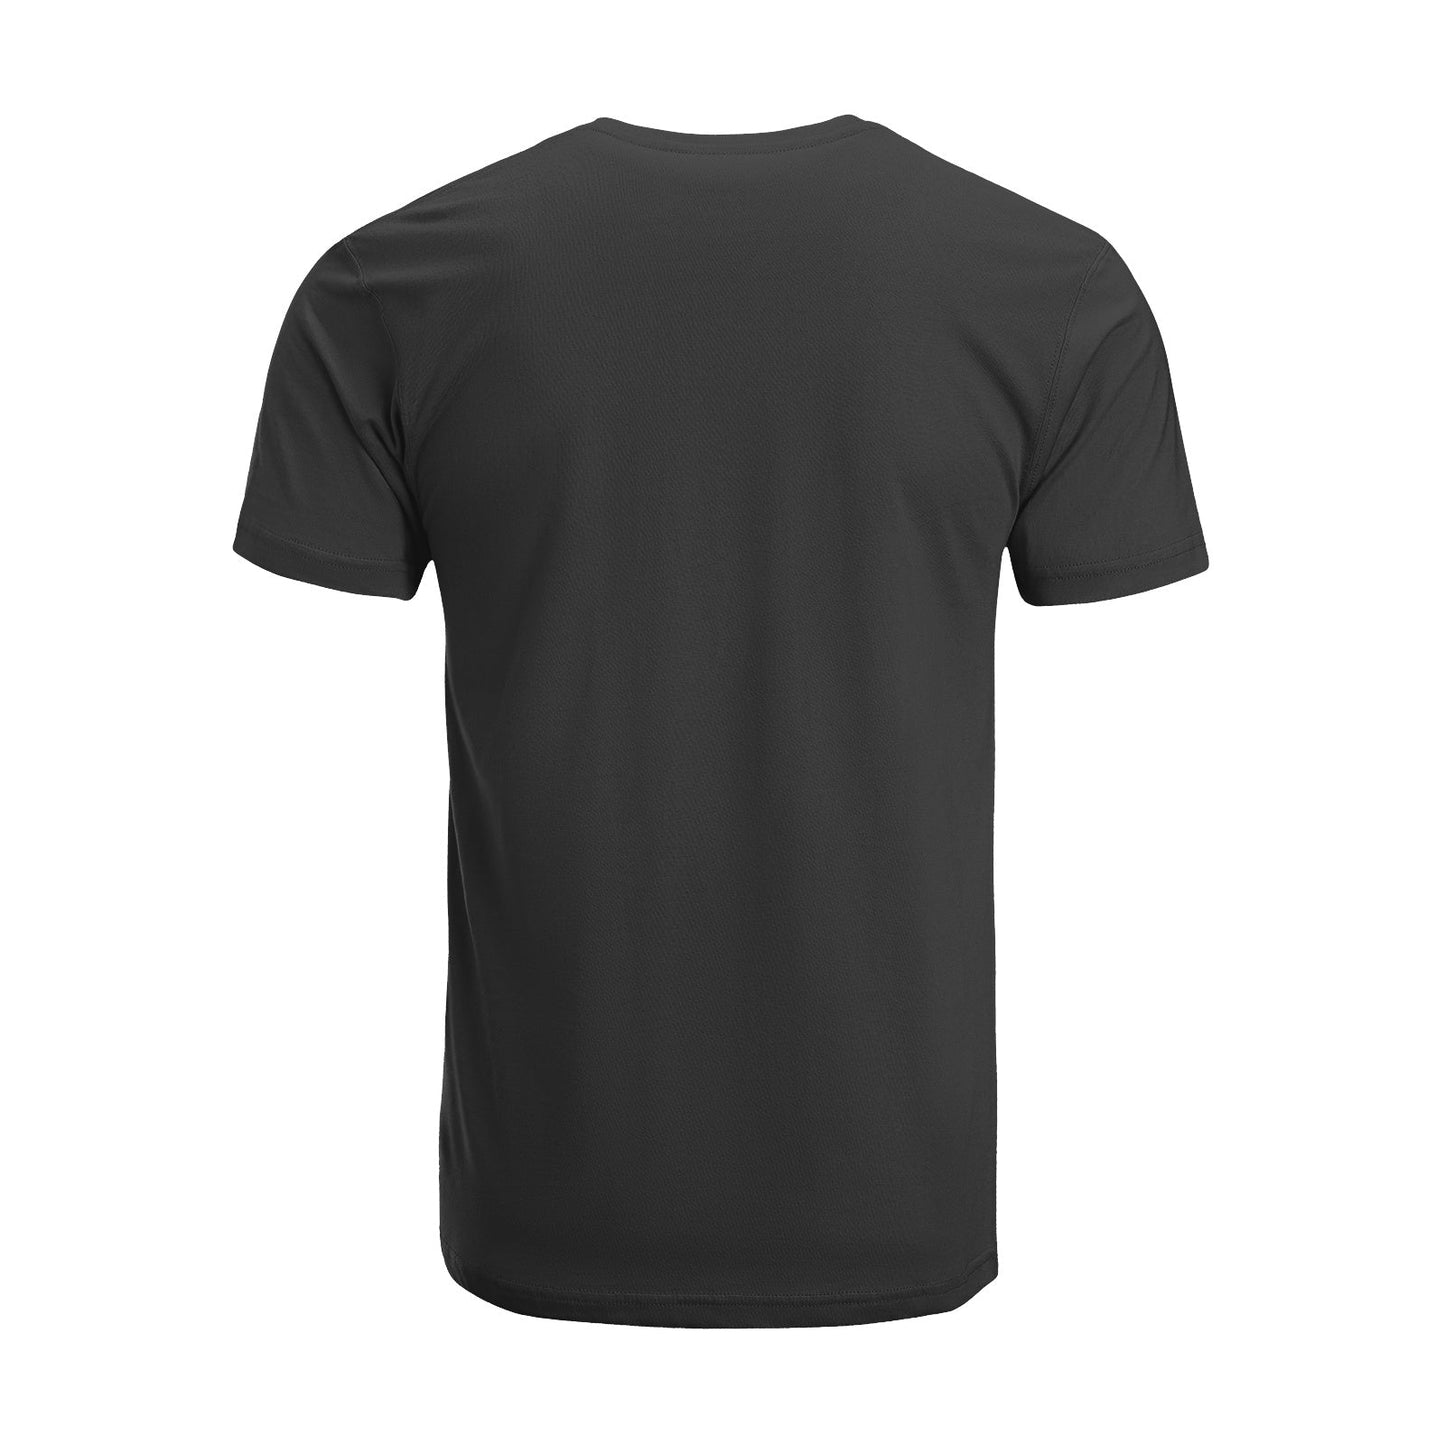 Unisex Short Sleeve Crew Neck Cotton Jersey T-Shirt MOM 30